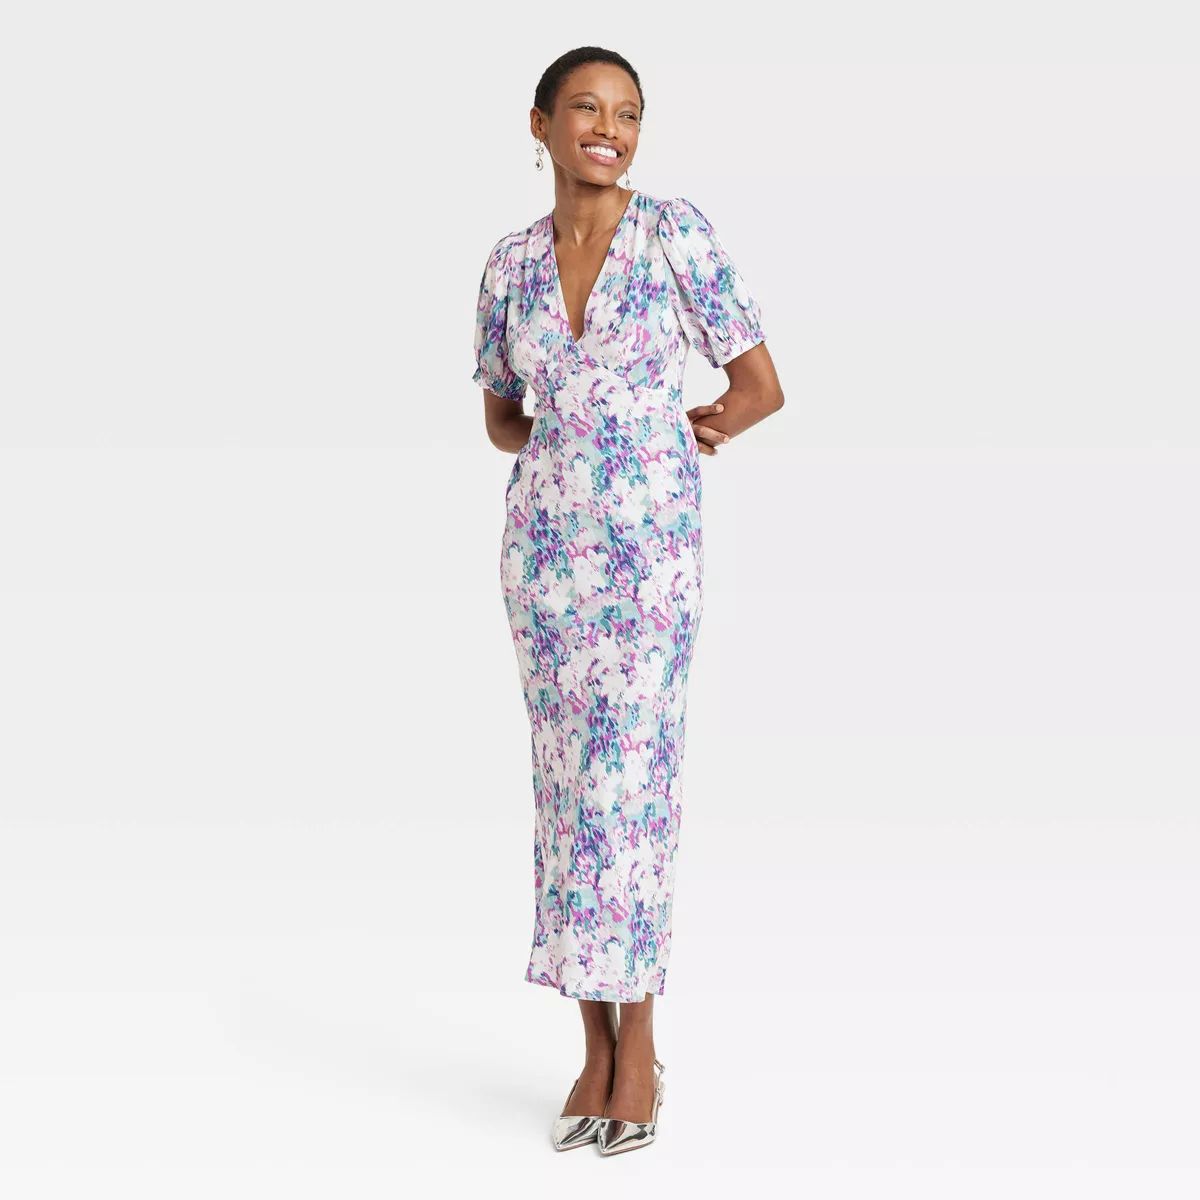 Women's Crepe Puff Short Sleeve Midi Dress - A New Day™ Black/White Polka Dots XL | Target